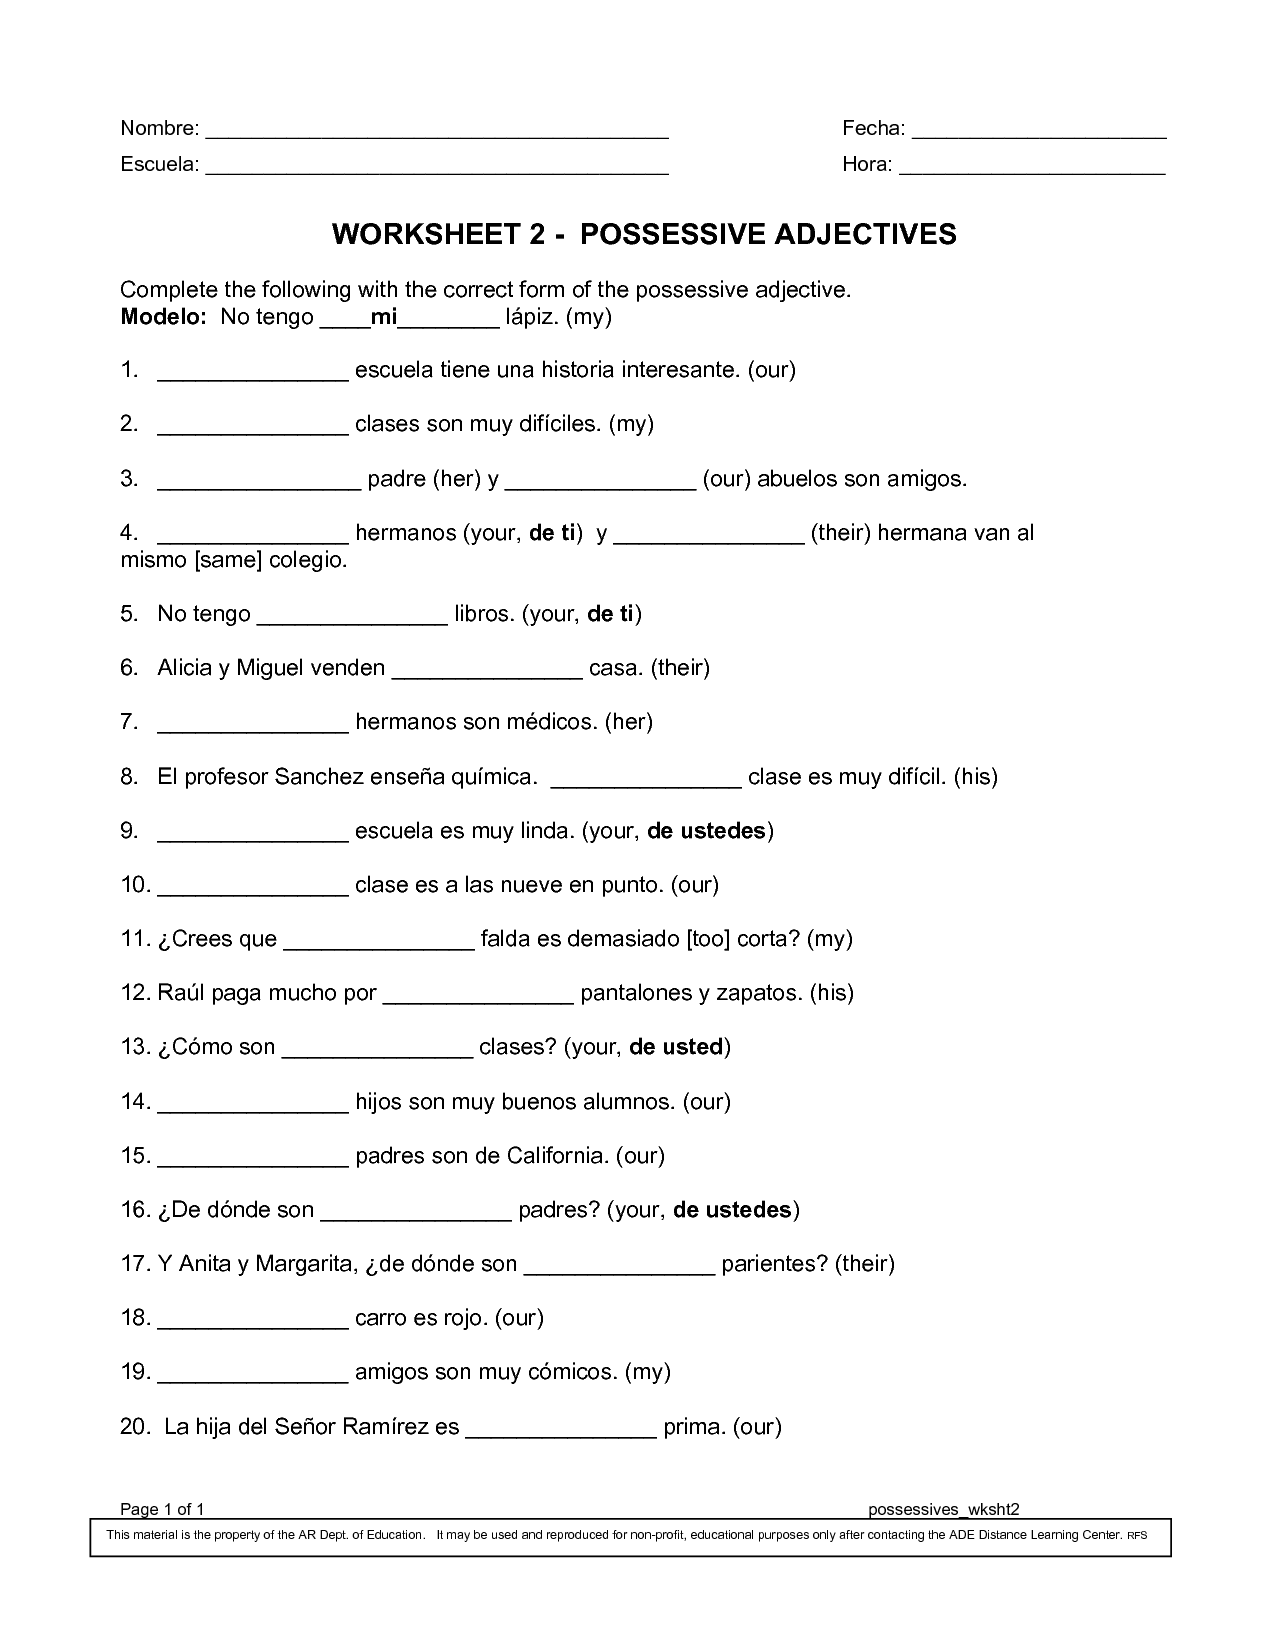 possessive-pronouns-interactive-worksheet-edform